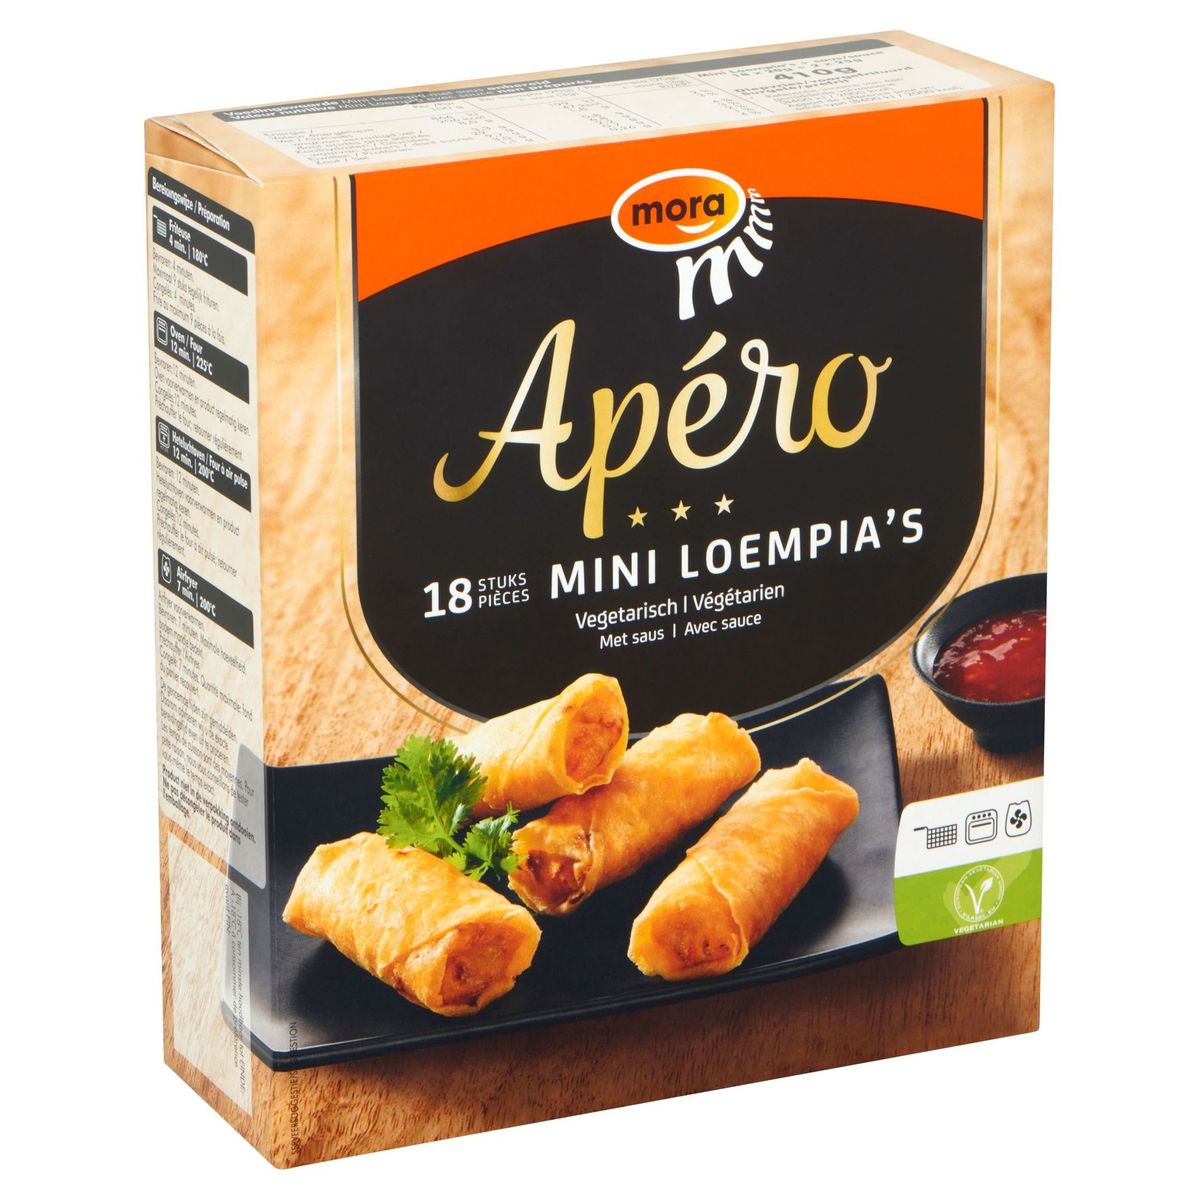 Mora Apéro Mini Loempia's Végétarien 18 x 20 g avec Sauce 2 x 25 g